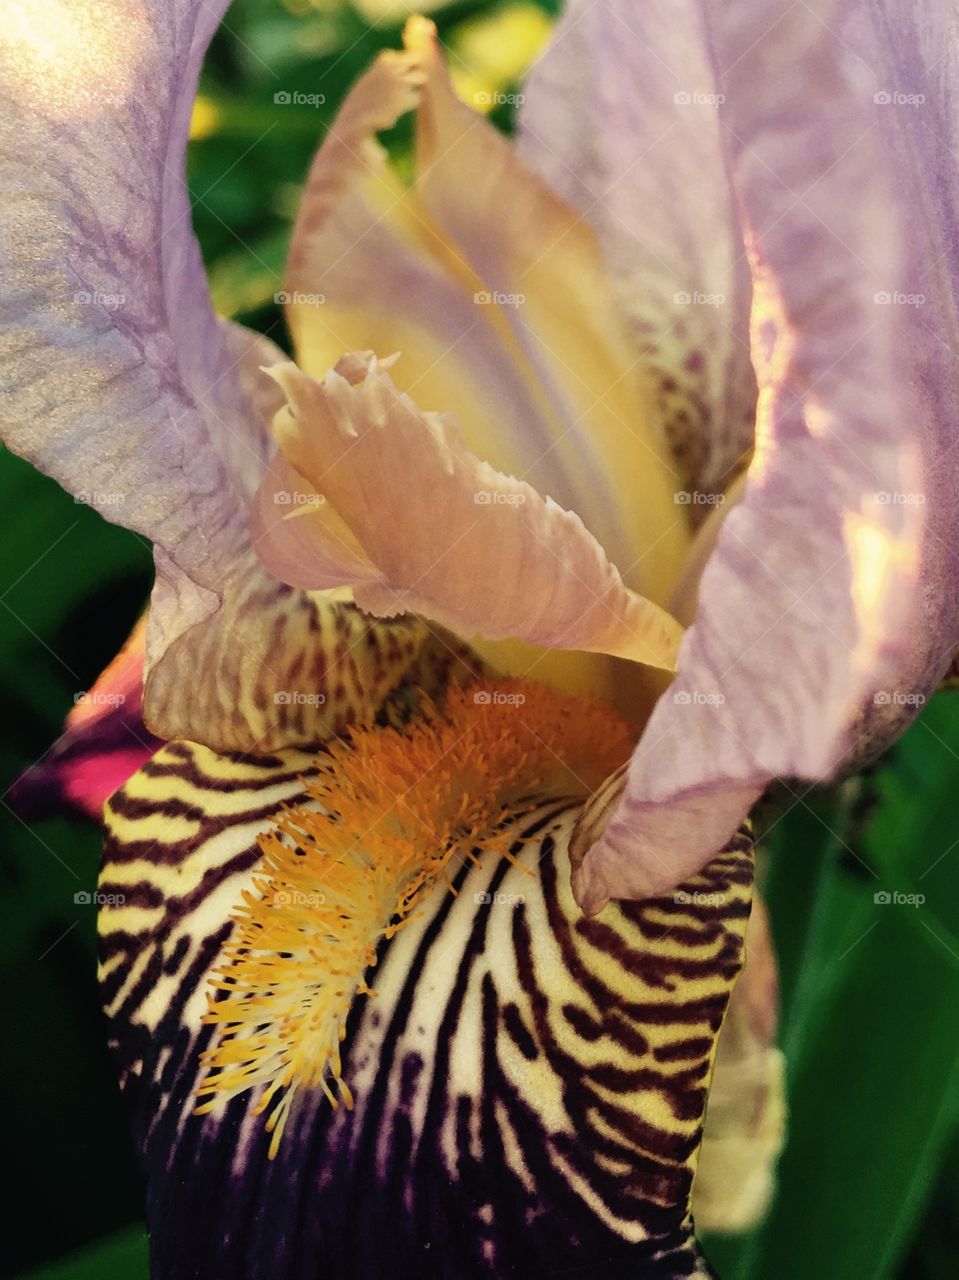 Purple and gold. Iris close up